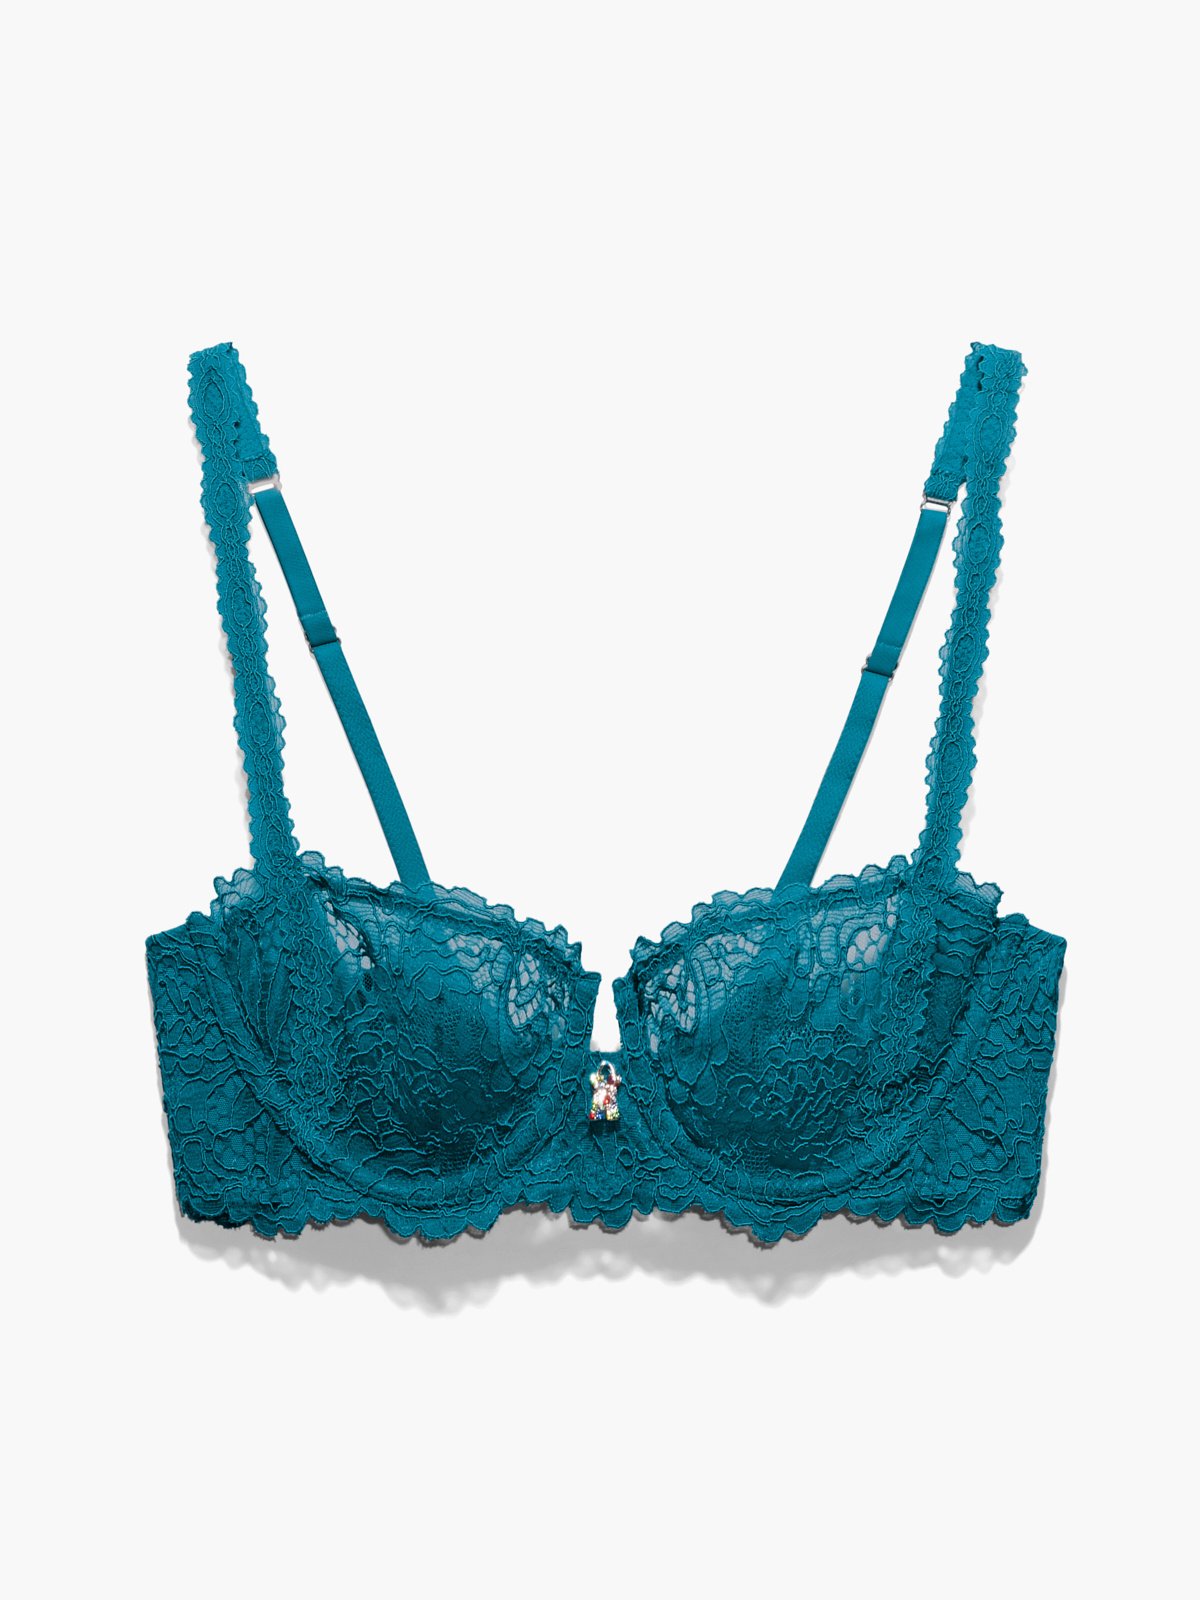 Romantic Corded Lace Unlined Balconette Bra in Blue | SAVAGE X FENTY